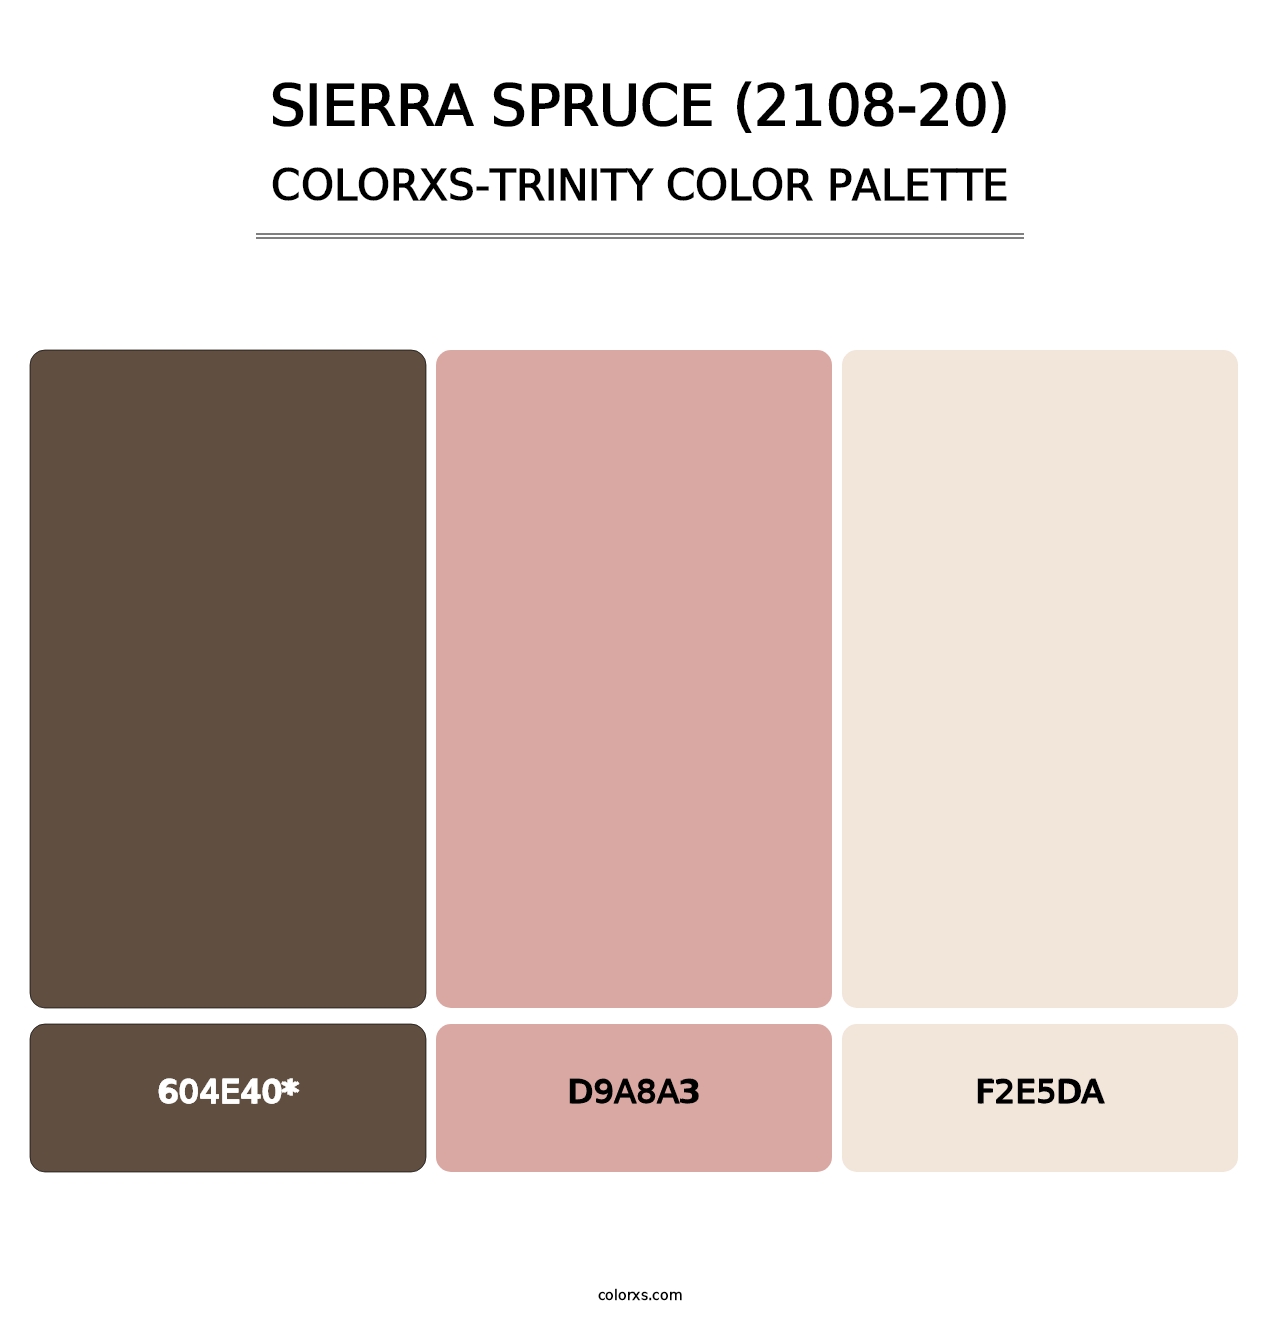 Sierra Spruce (2108-20) - Colorxs Trinity Palette